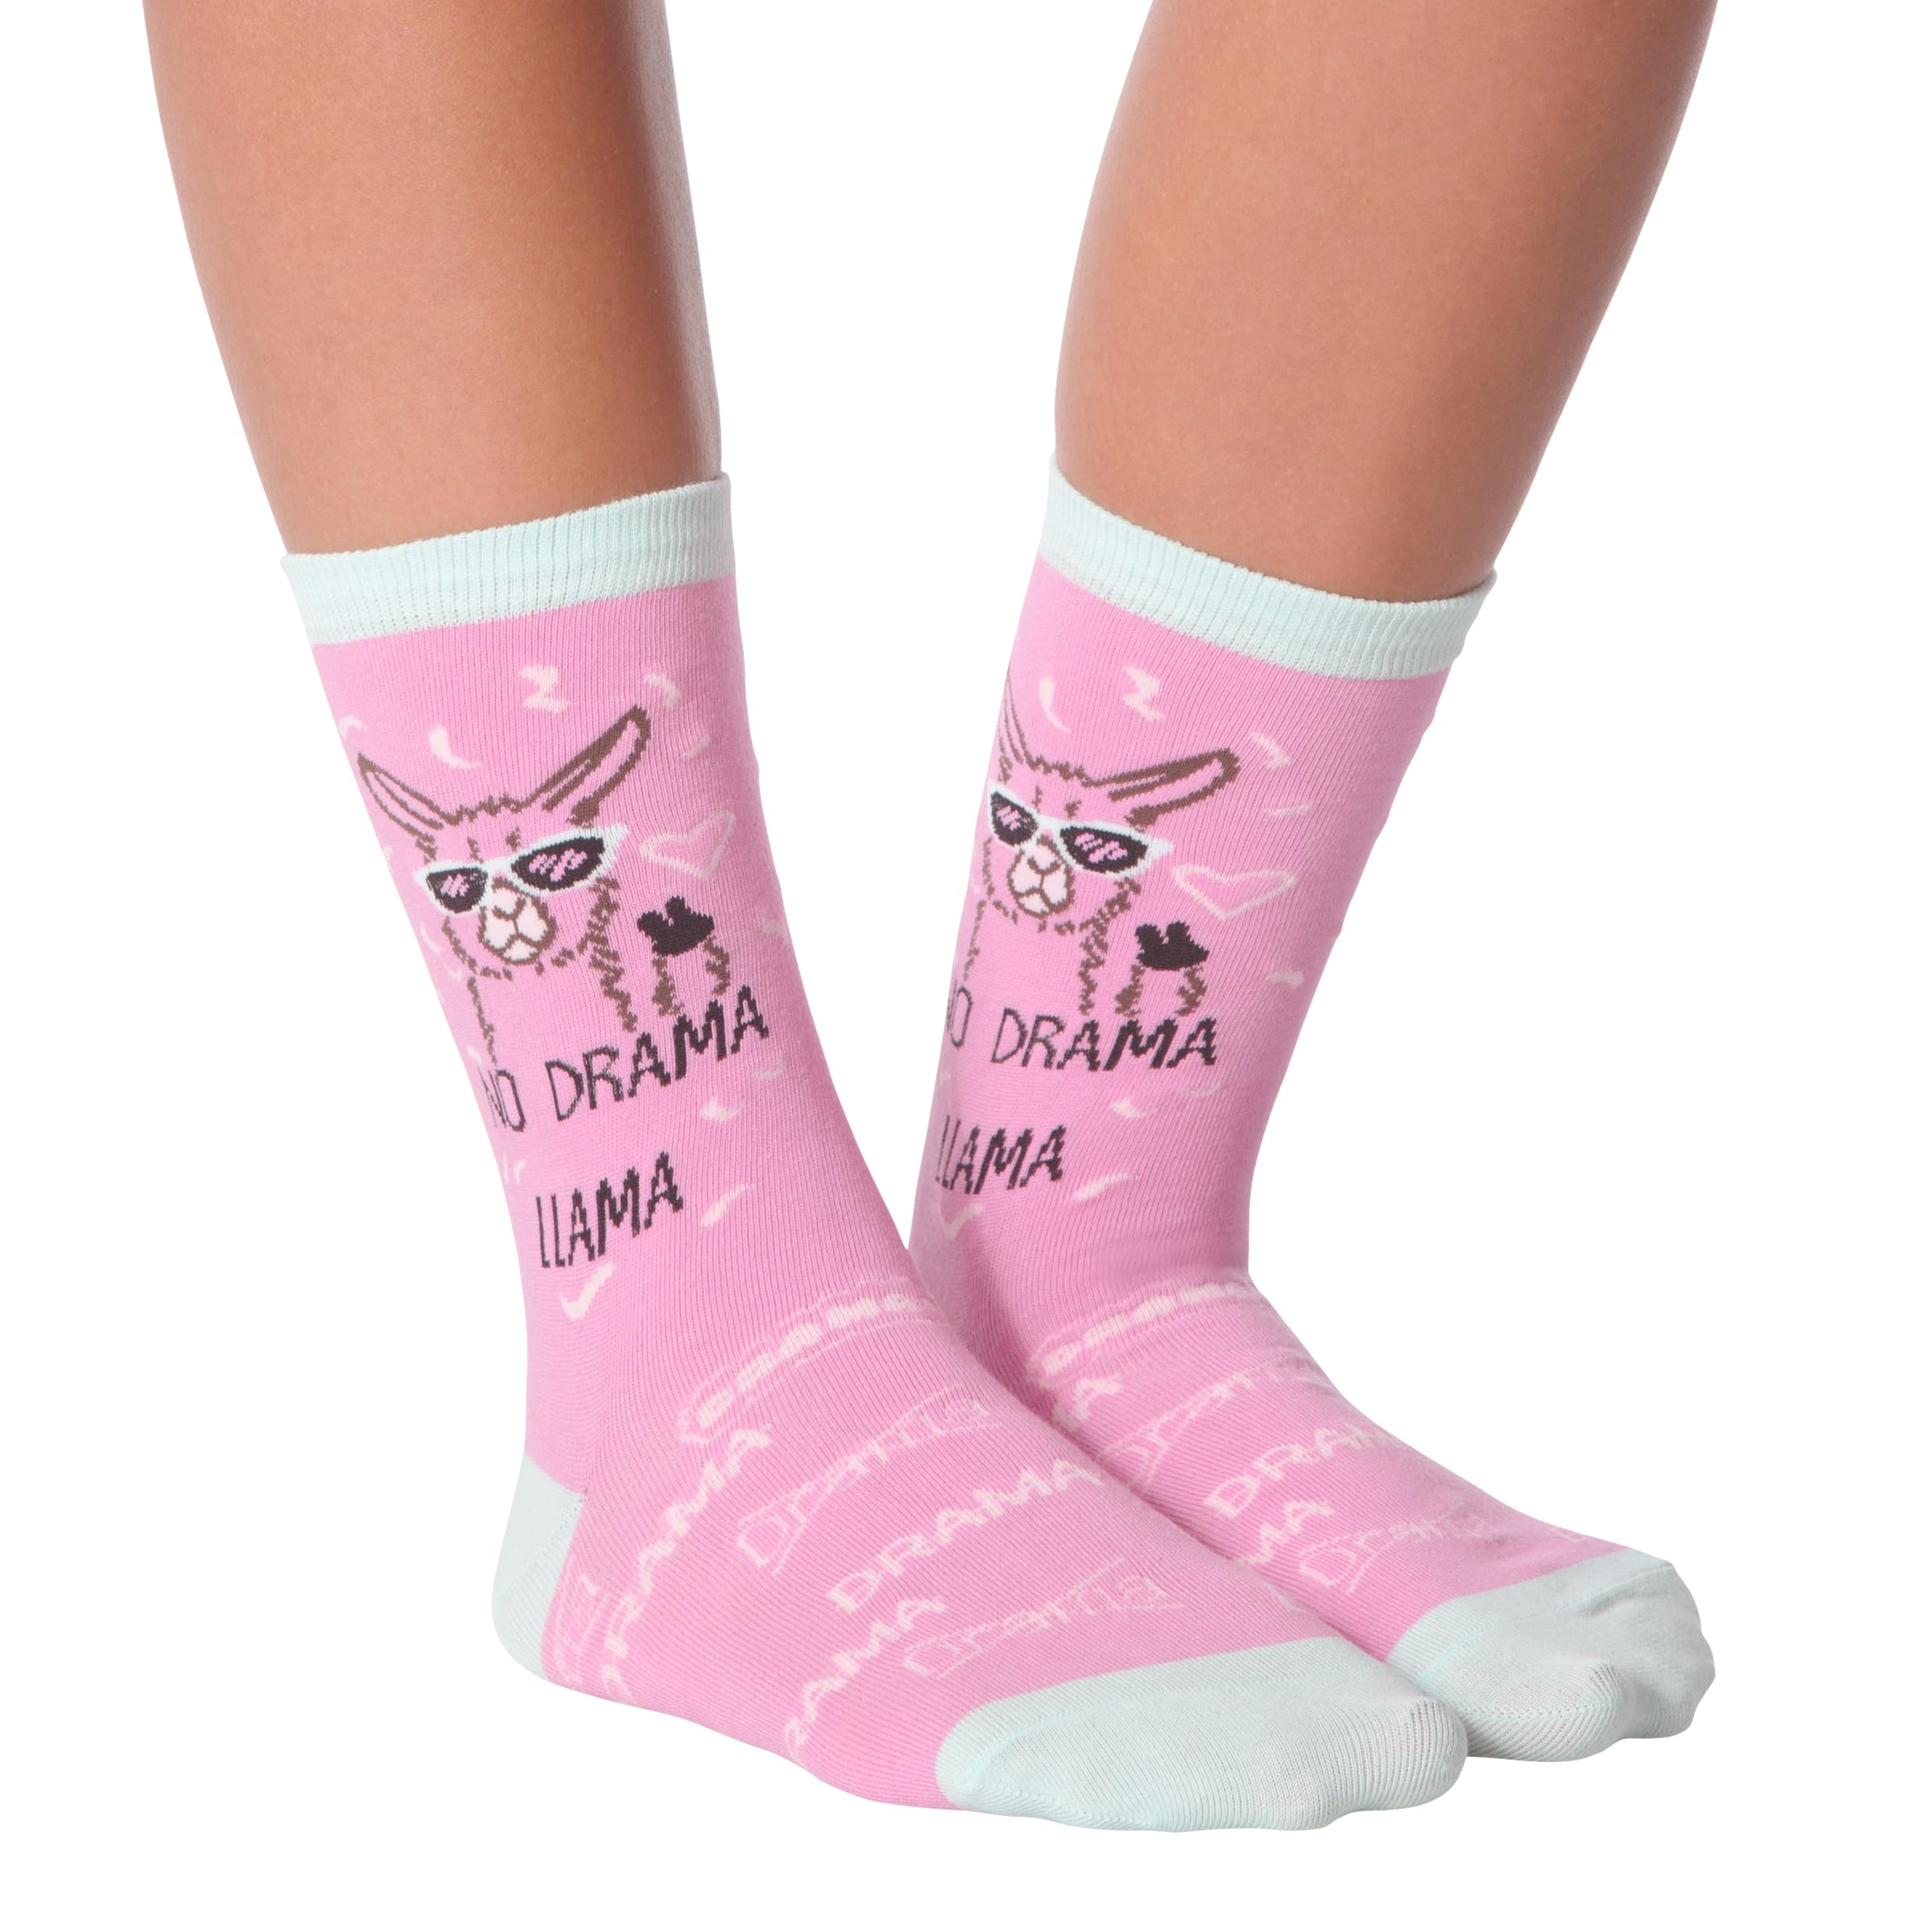 K. Bell Socks Women's Funny Animal Crew Socks-1 Pairs-Cool & Cute Wordplay Novelty Gifts